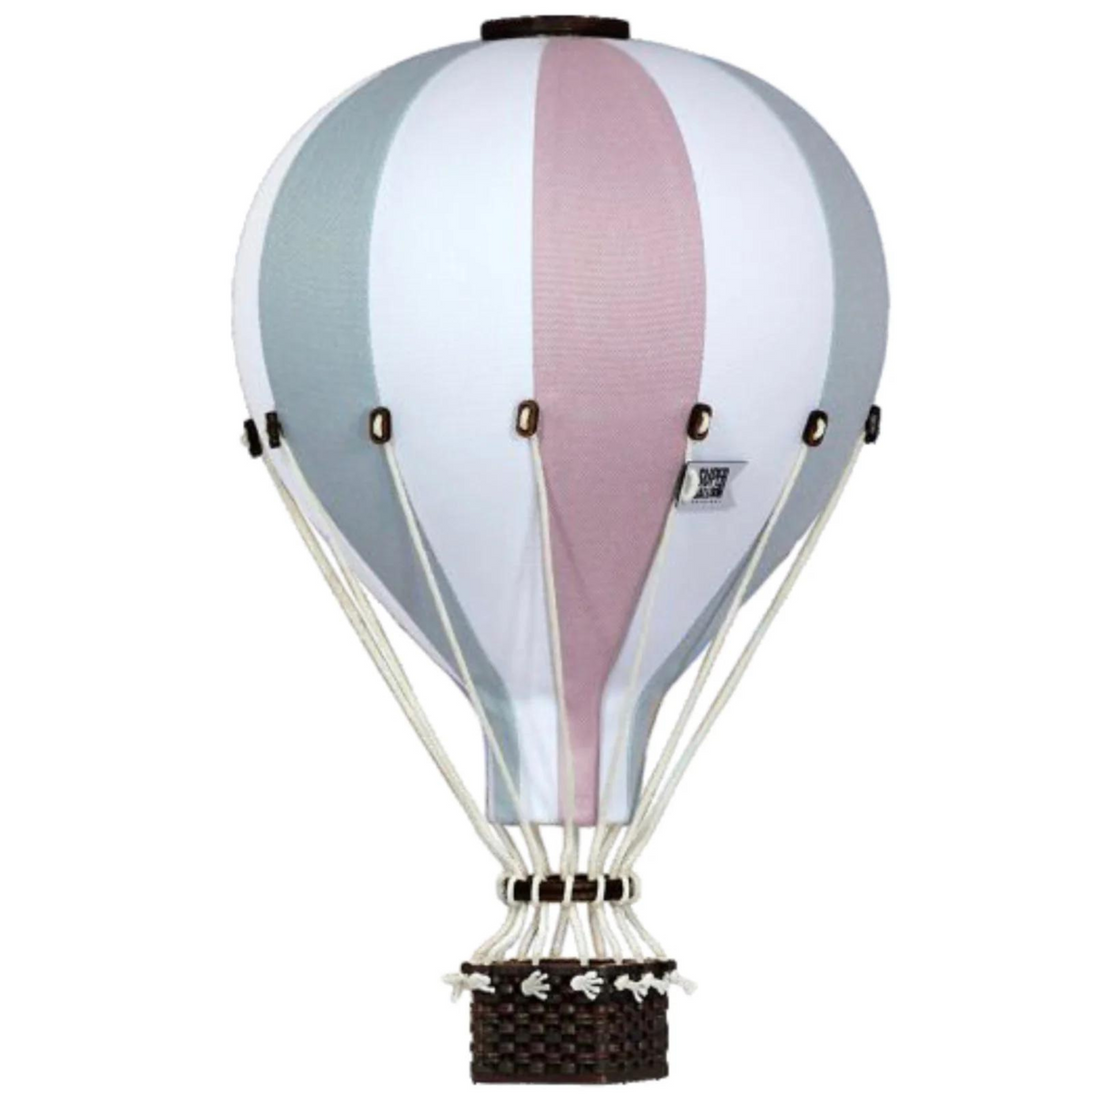 Super Balloon oro balionas - Sage | Blush pink